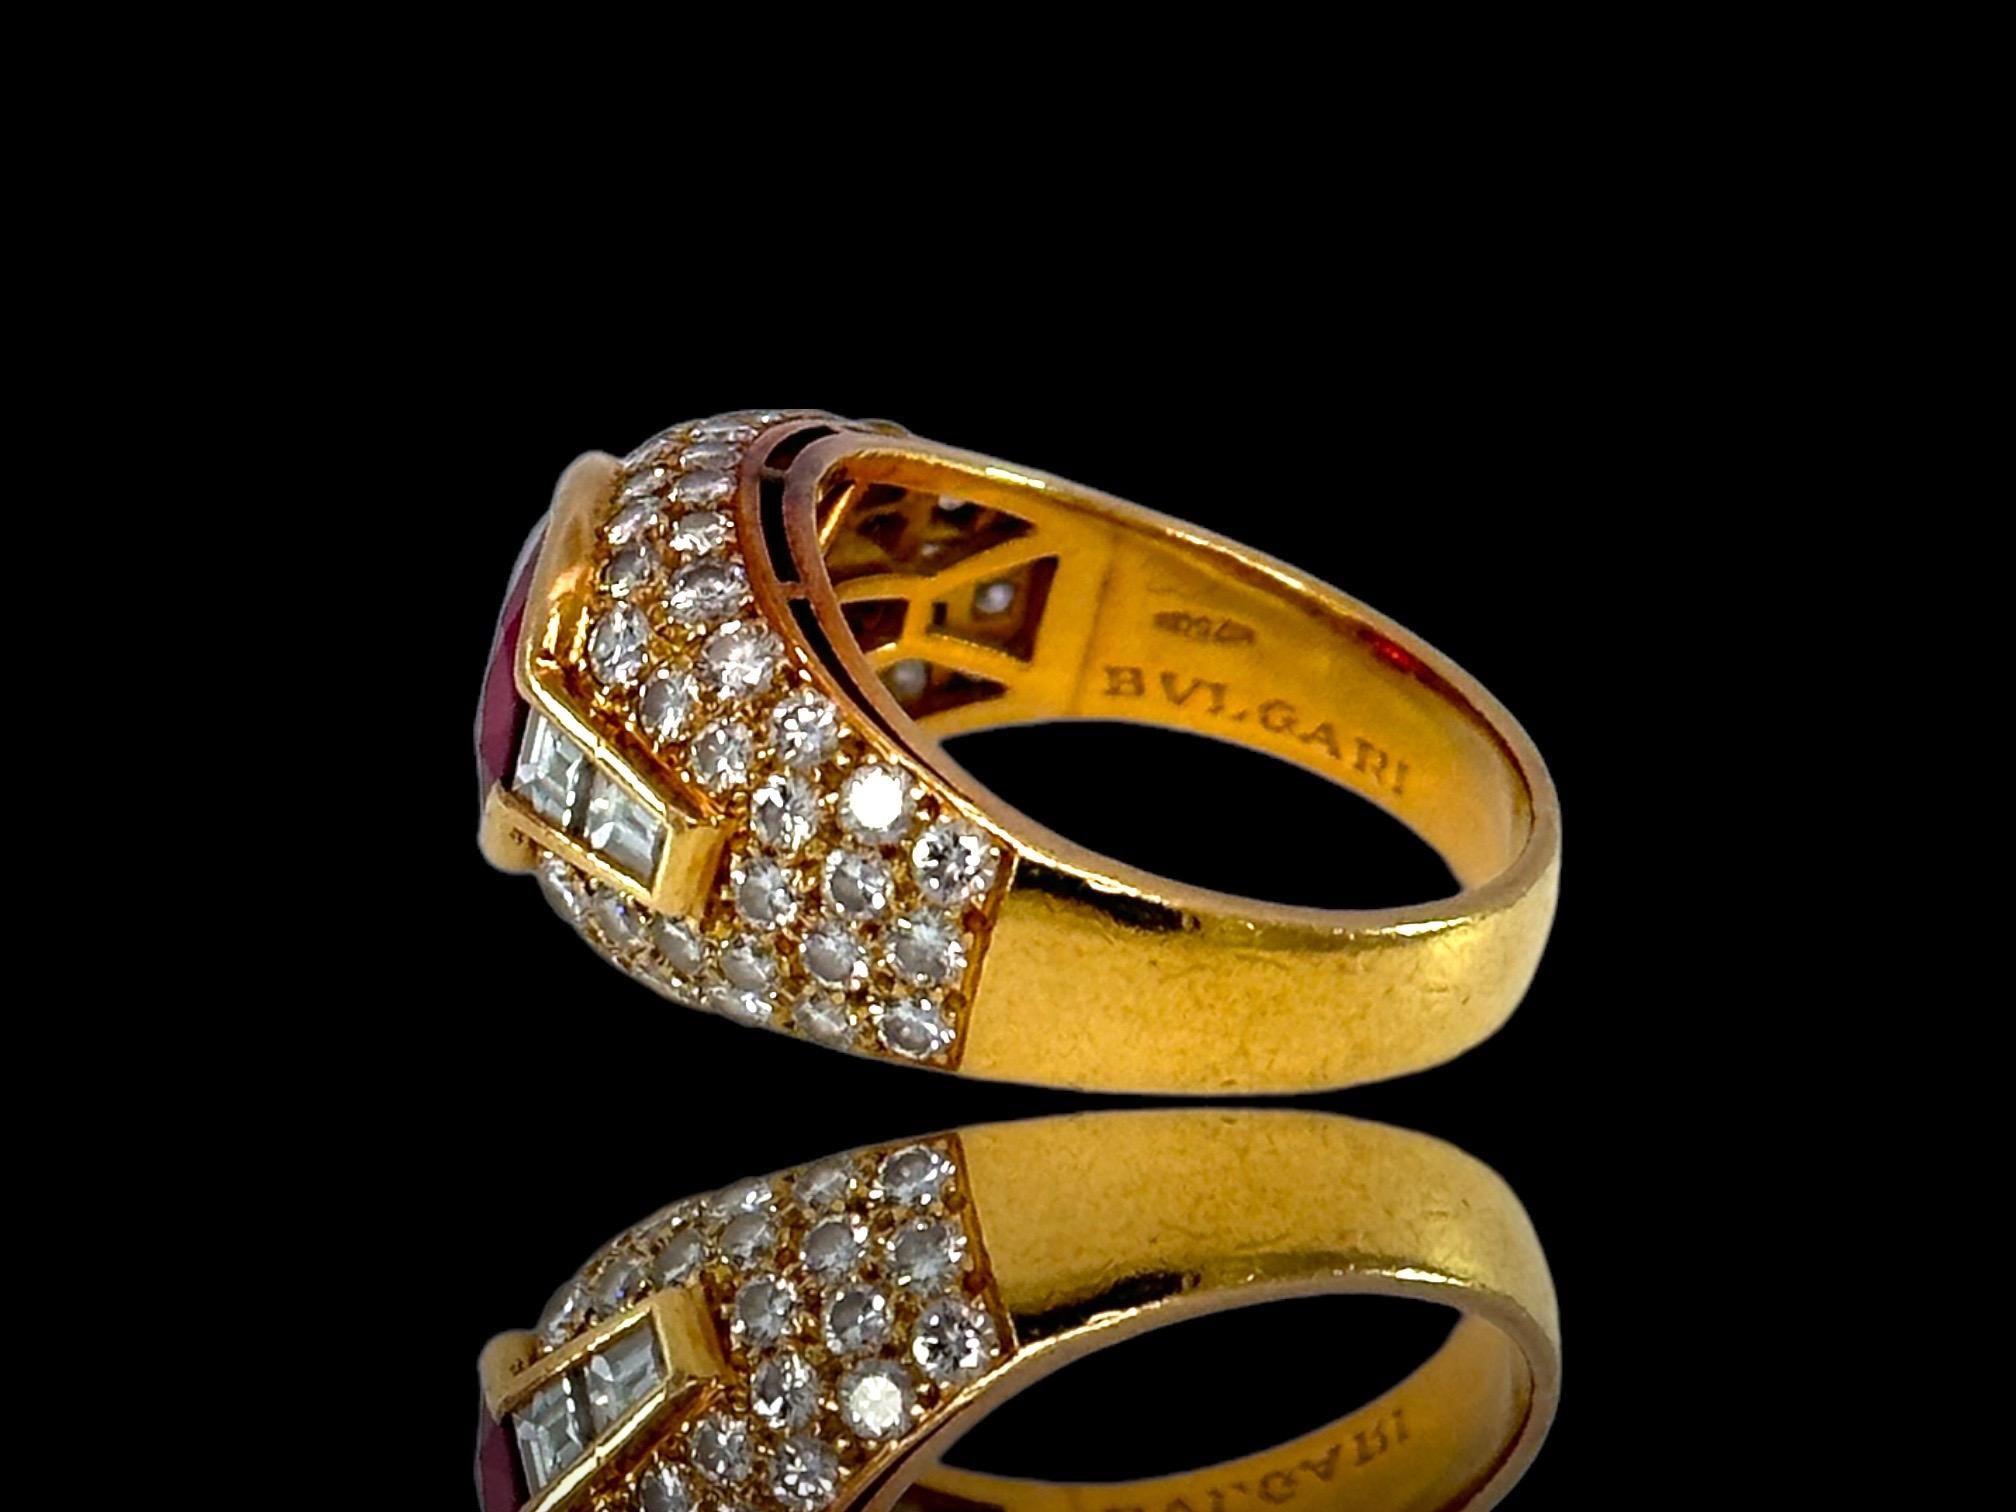 Artisan Bvlgari Trombino 18kt Yellow Gold Ring 2.09ct Ruby & Diamonds With GRS Cert For Sale